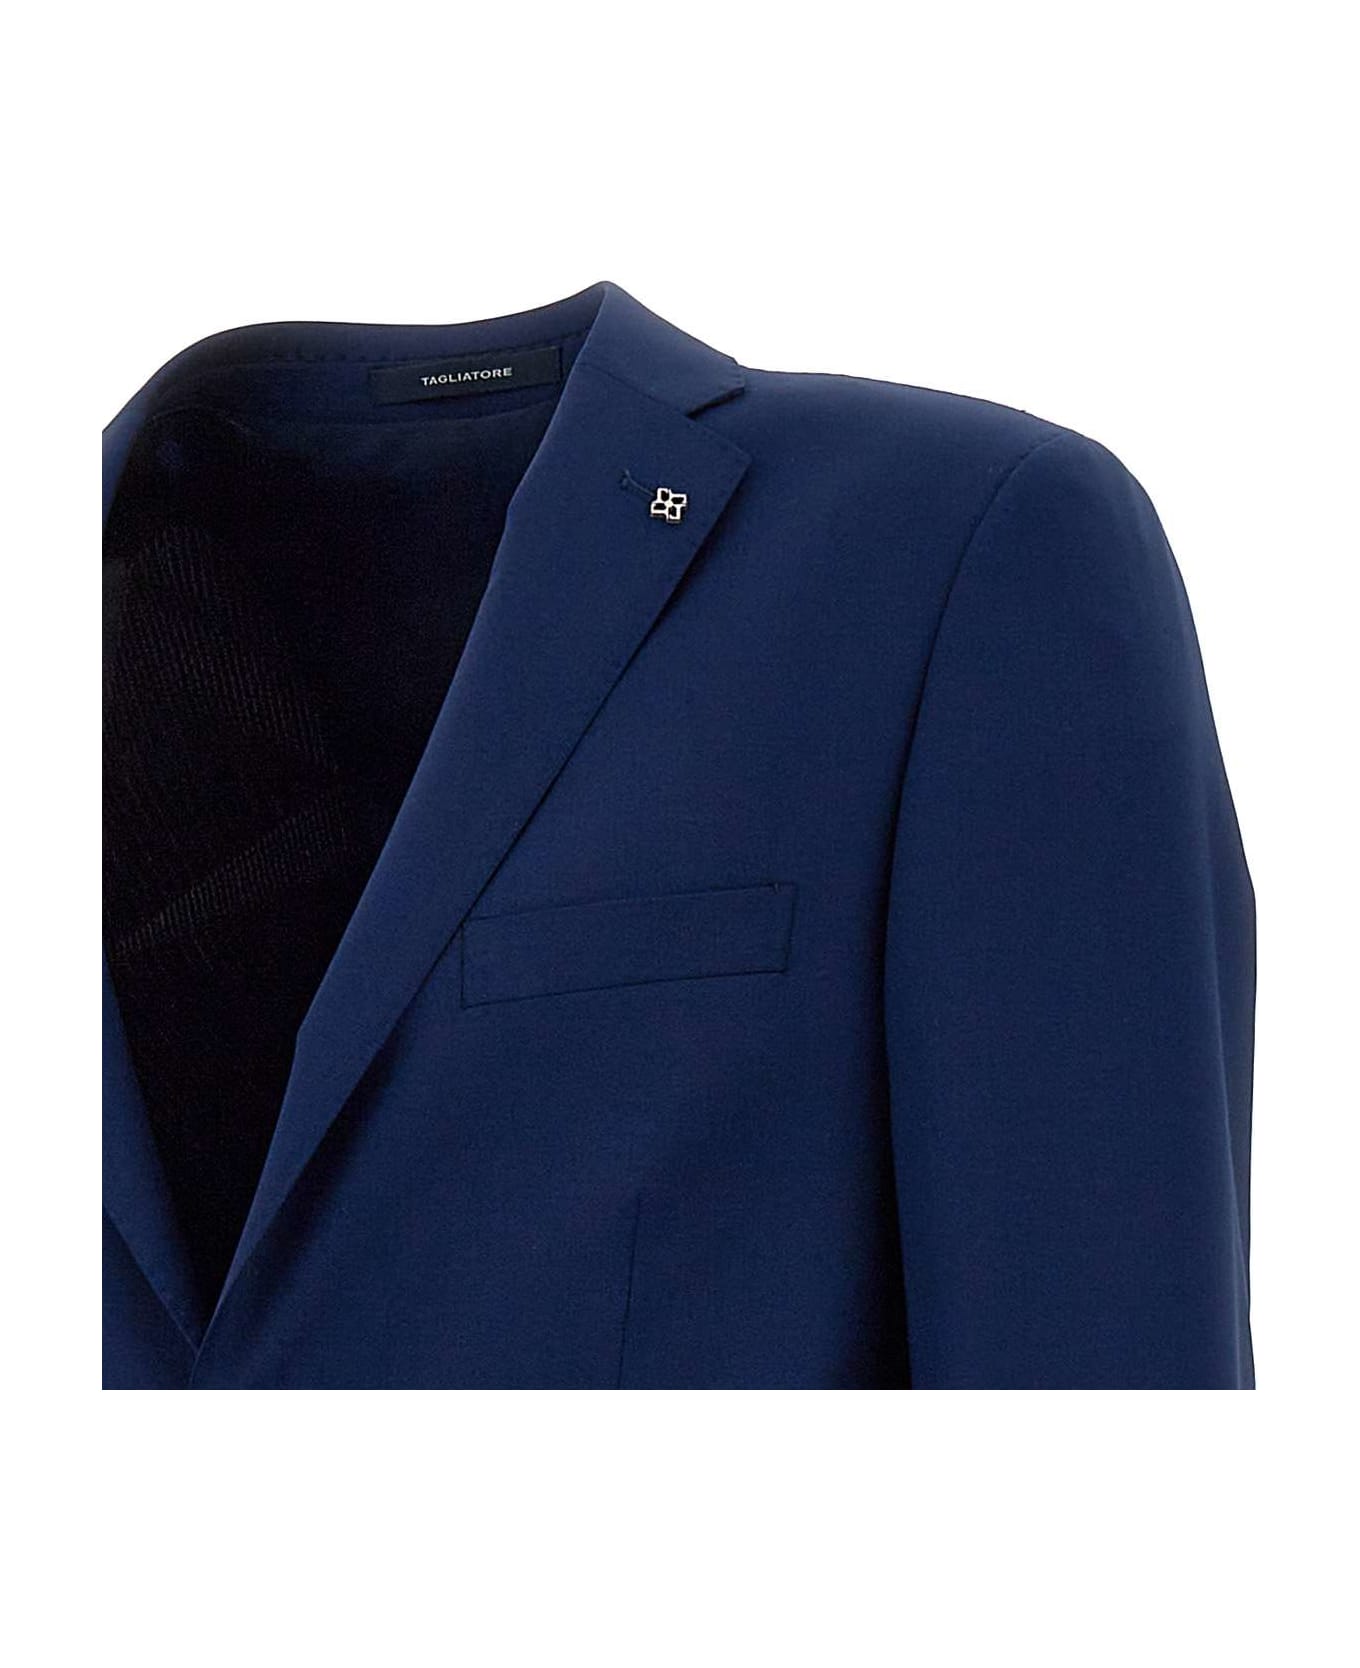 Tagliatore Wool Suit - BLUE